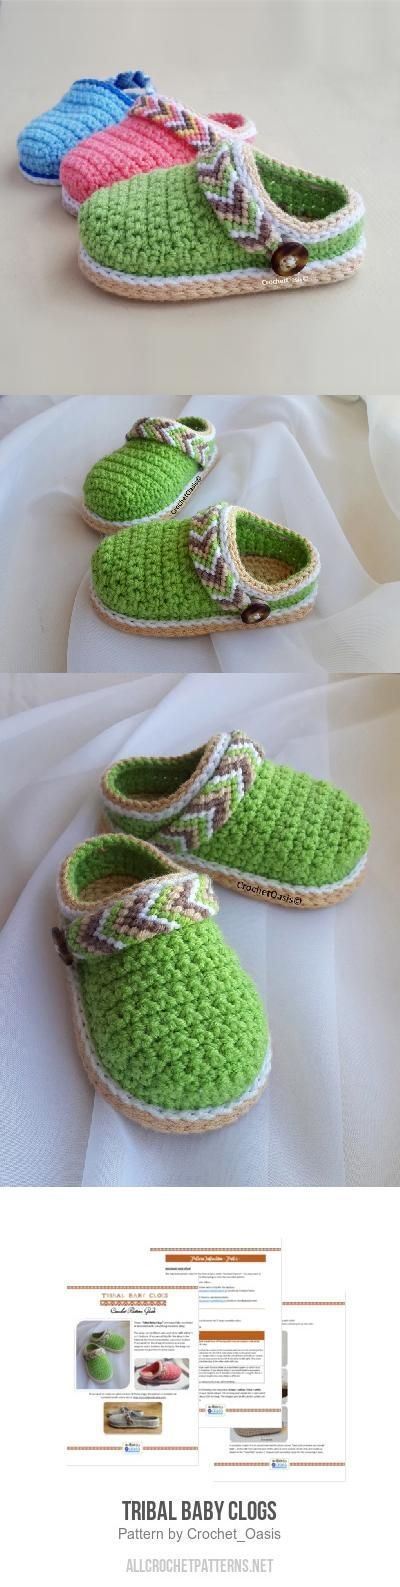 Tribal Baby Clogs crochet pattern